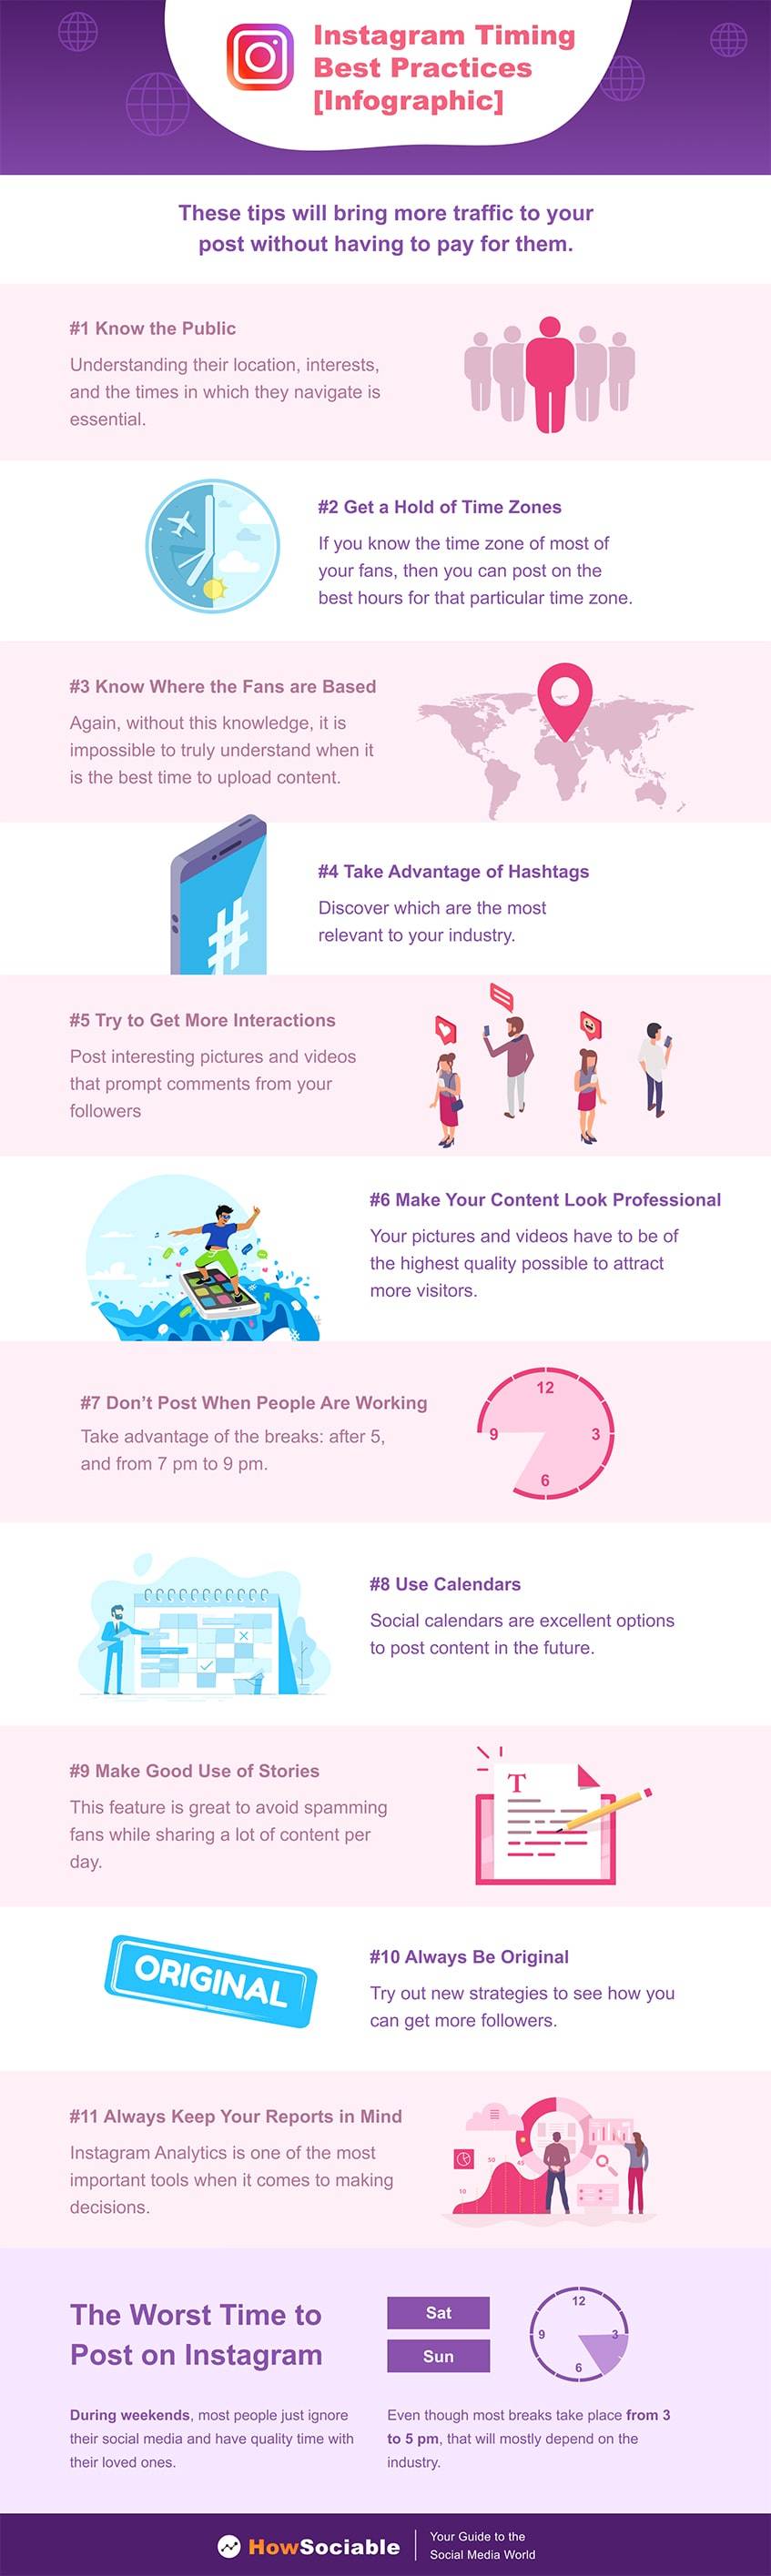 Instagram Timing Best Practices Infographic